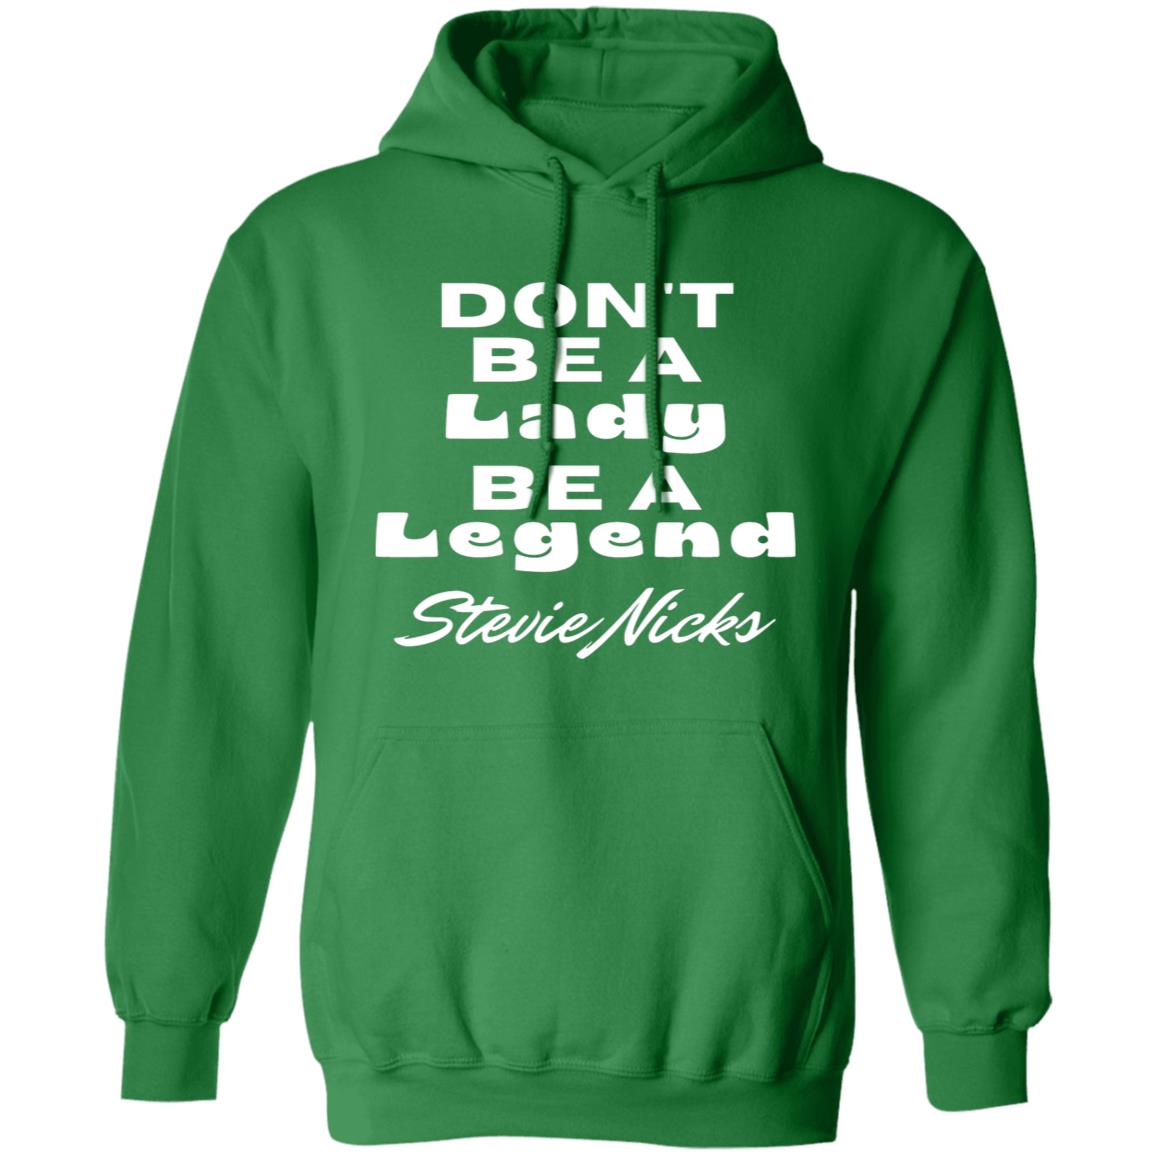 Stevie Nicks Be A Legend Hooded Sweatshirt